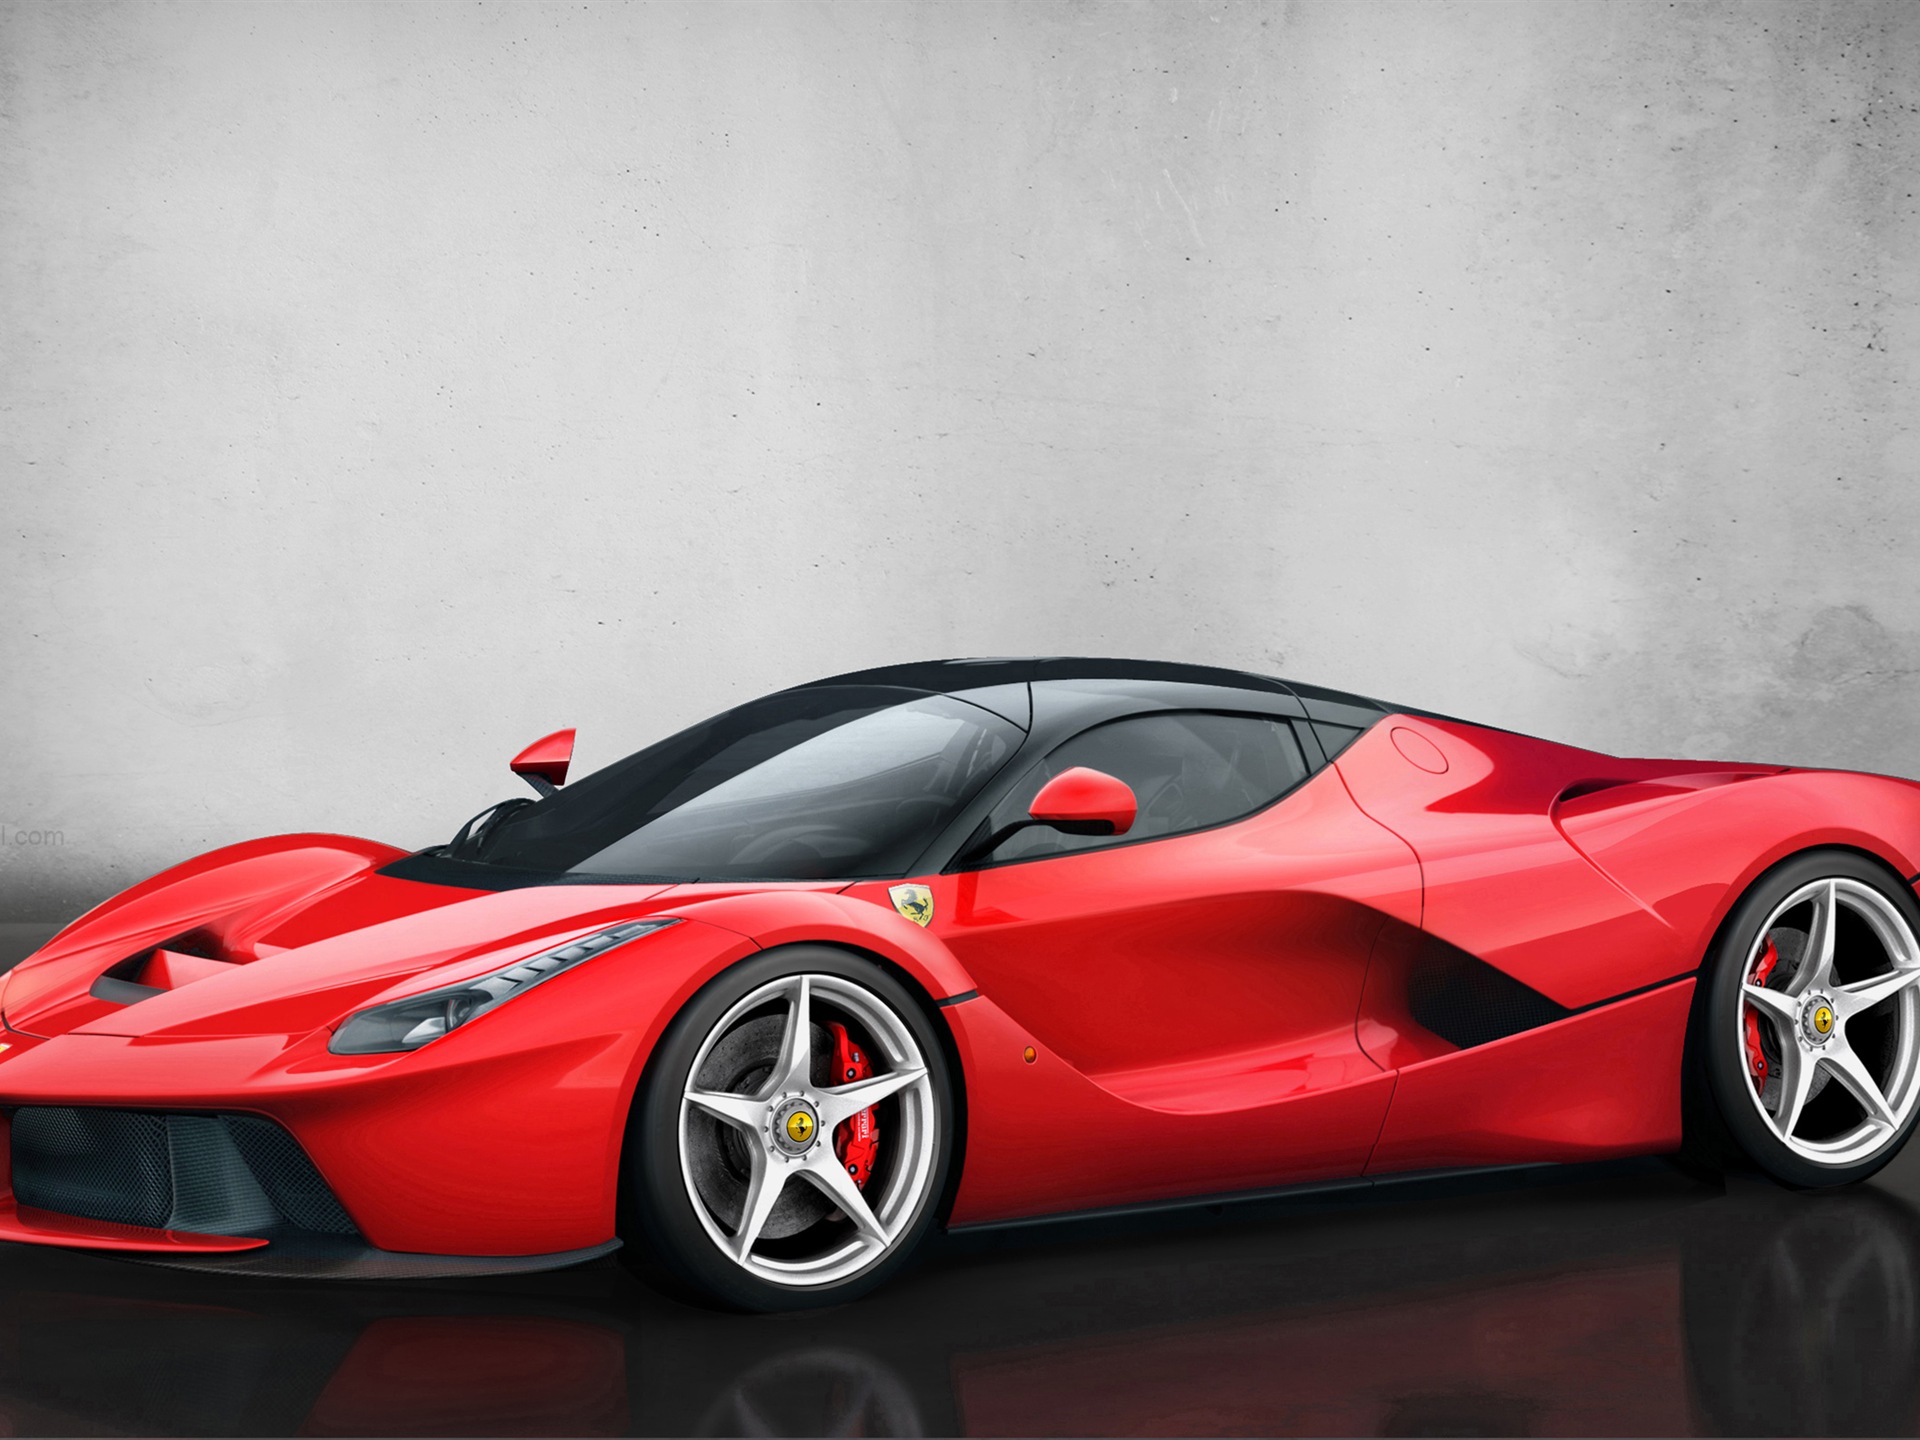 2013 Ferrari LaFerrari 法拉利LaFerrari红色超级跑车高清壁纸7 - 1920x1440